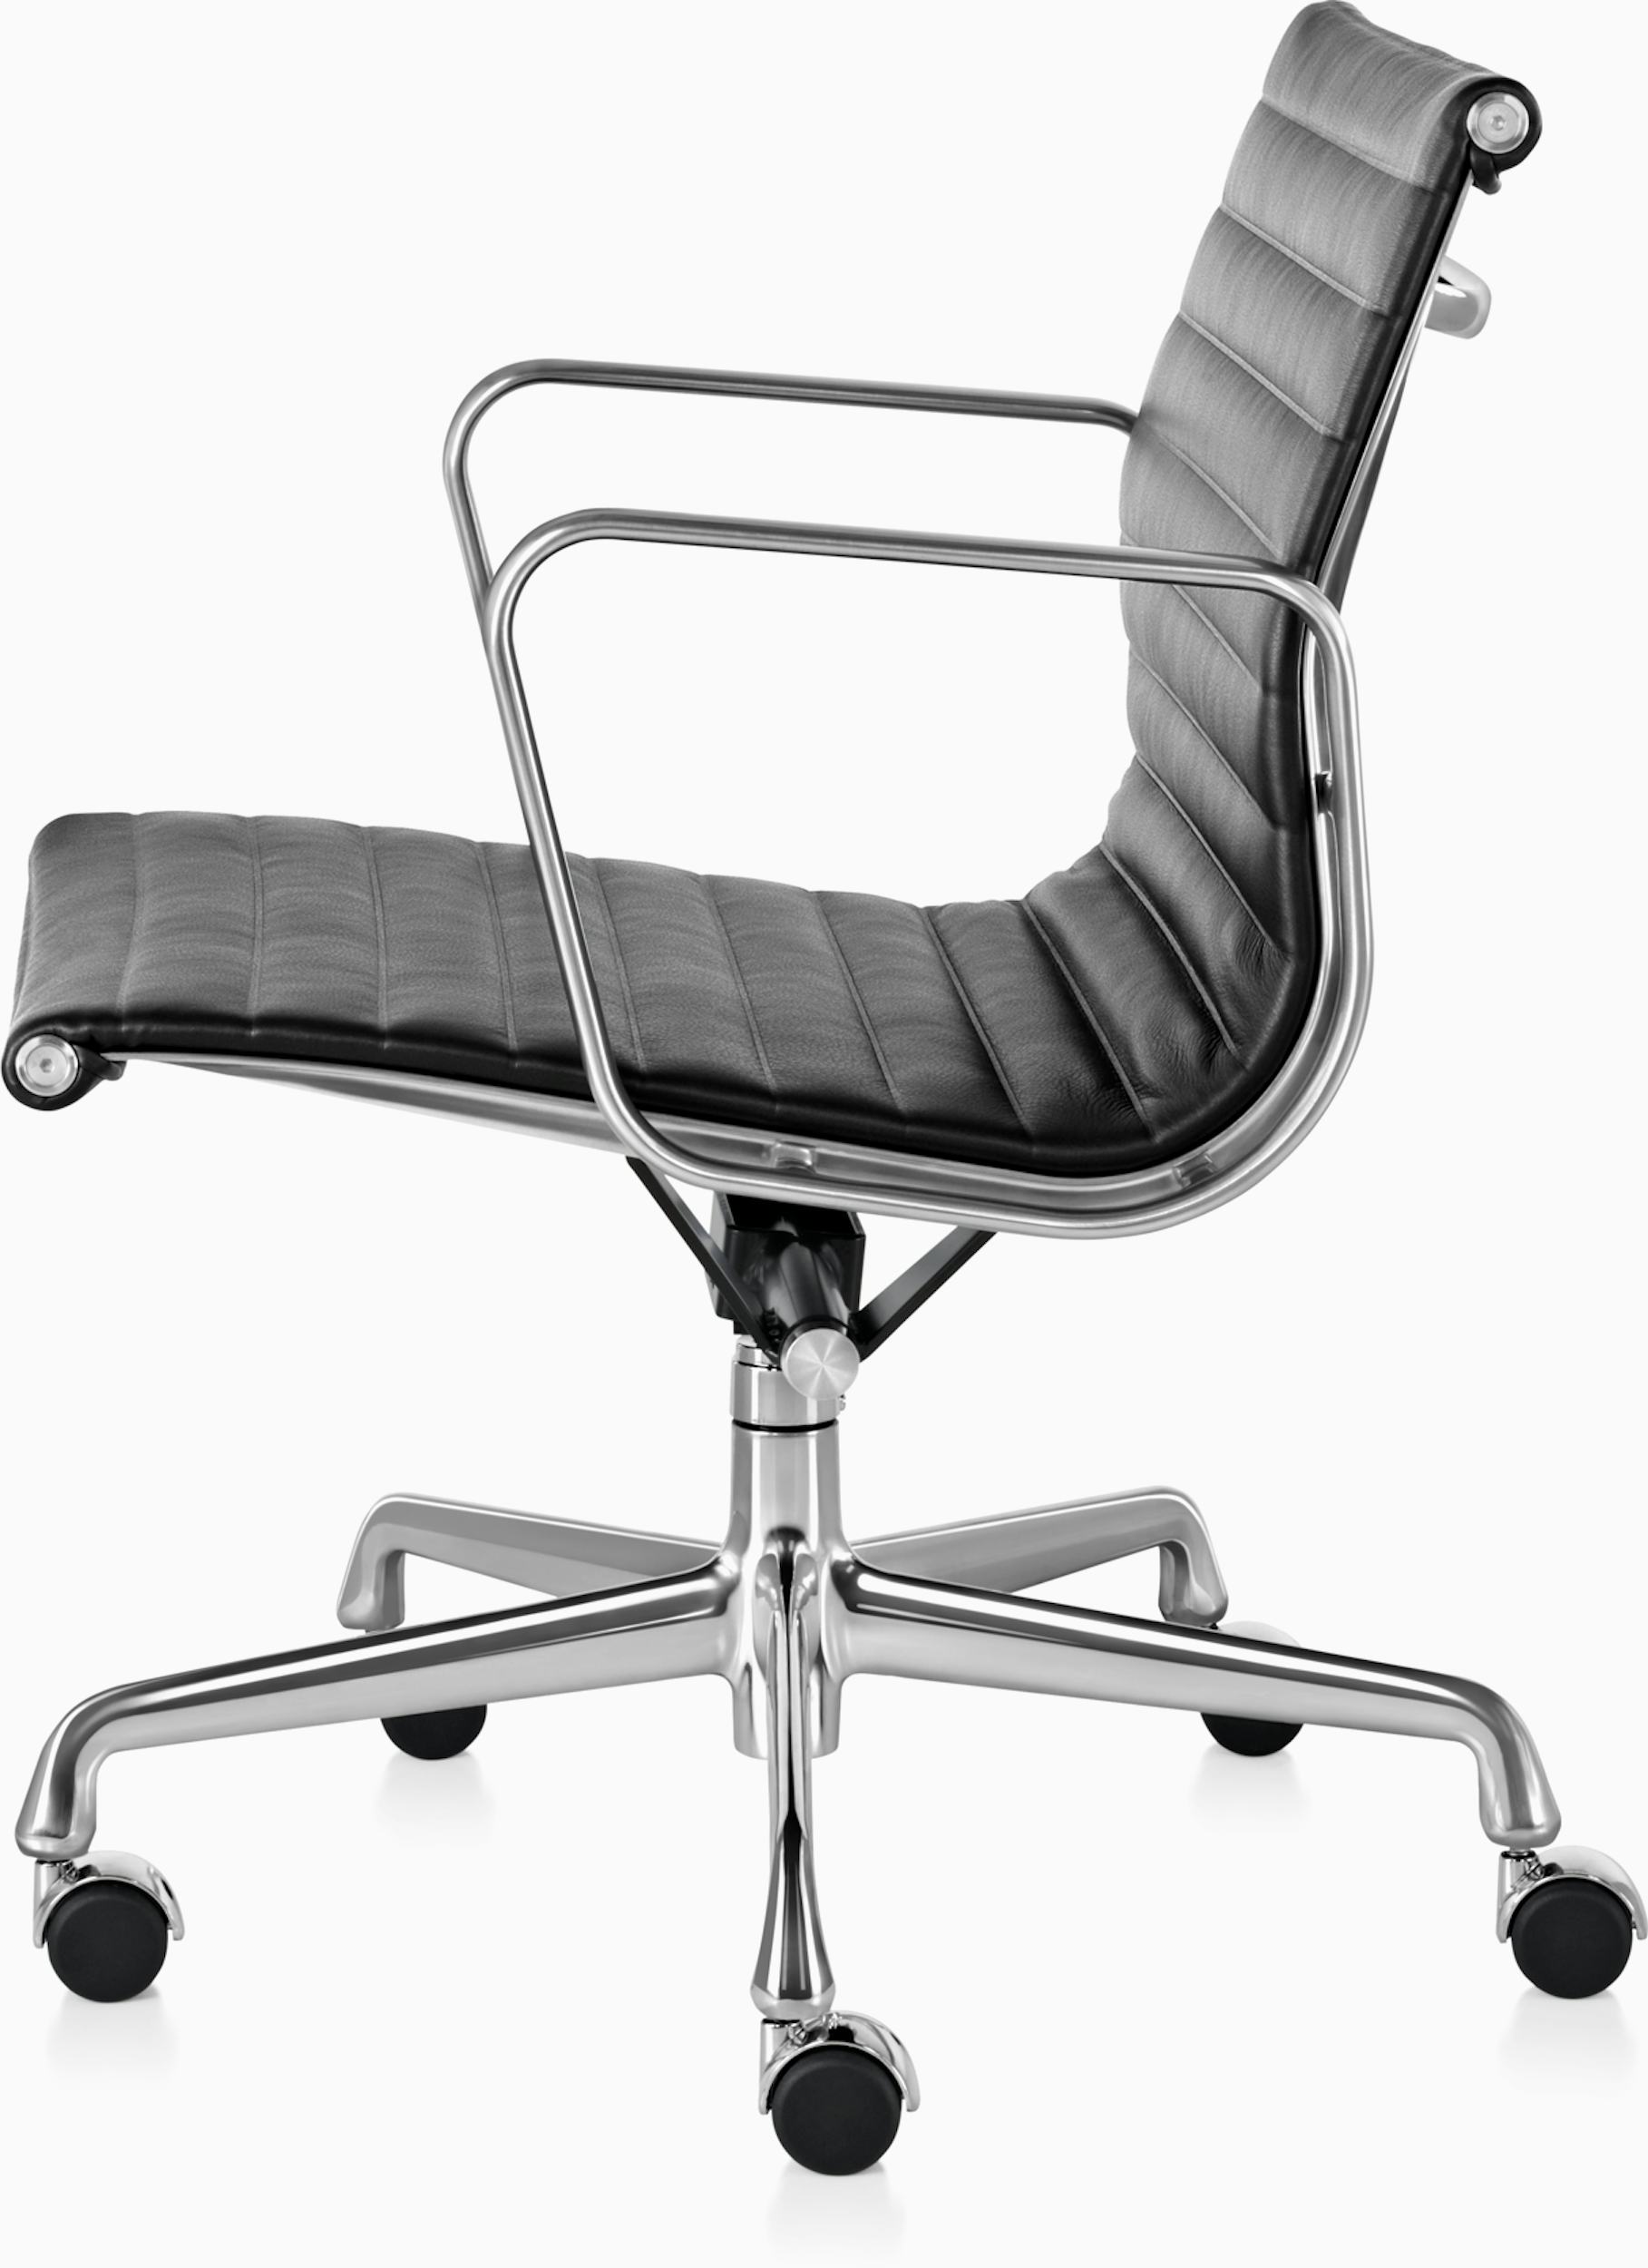 Herman Miller Eames Soft Pad Chair, Management Height in Dark Navy